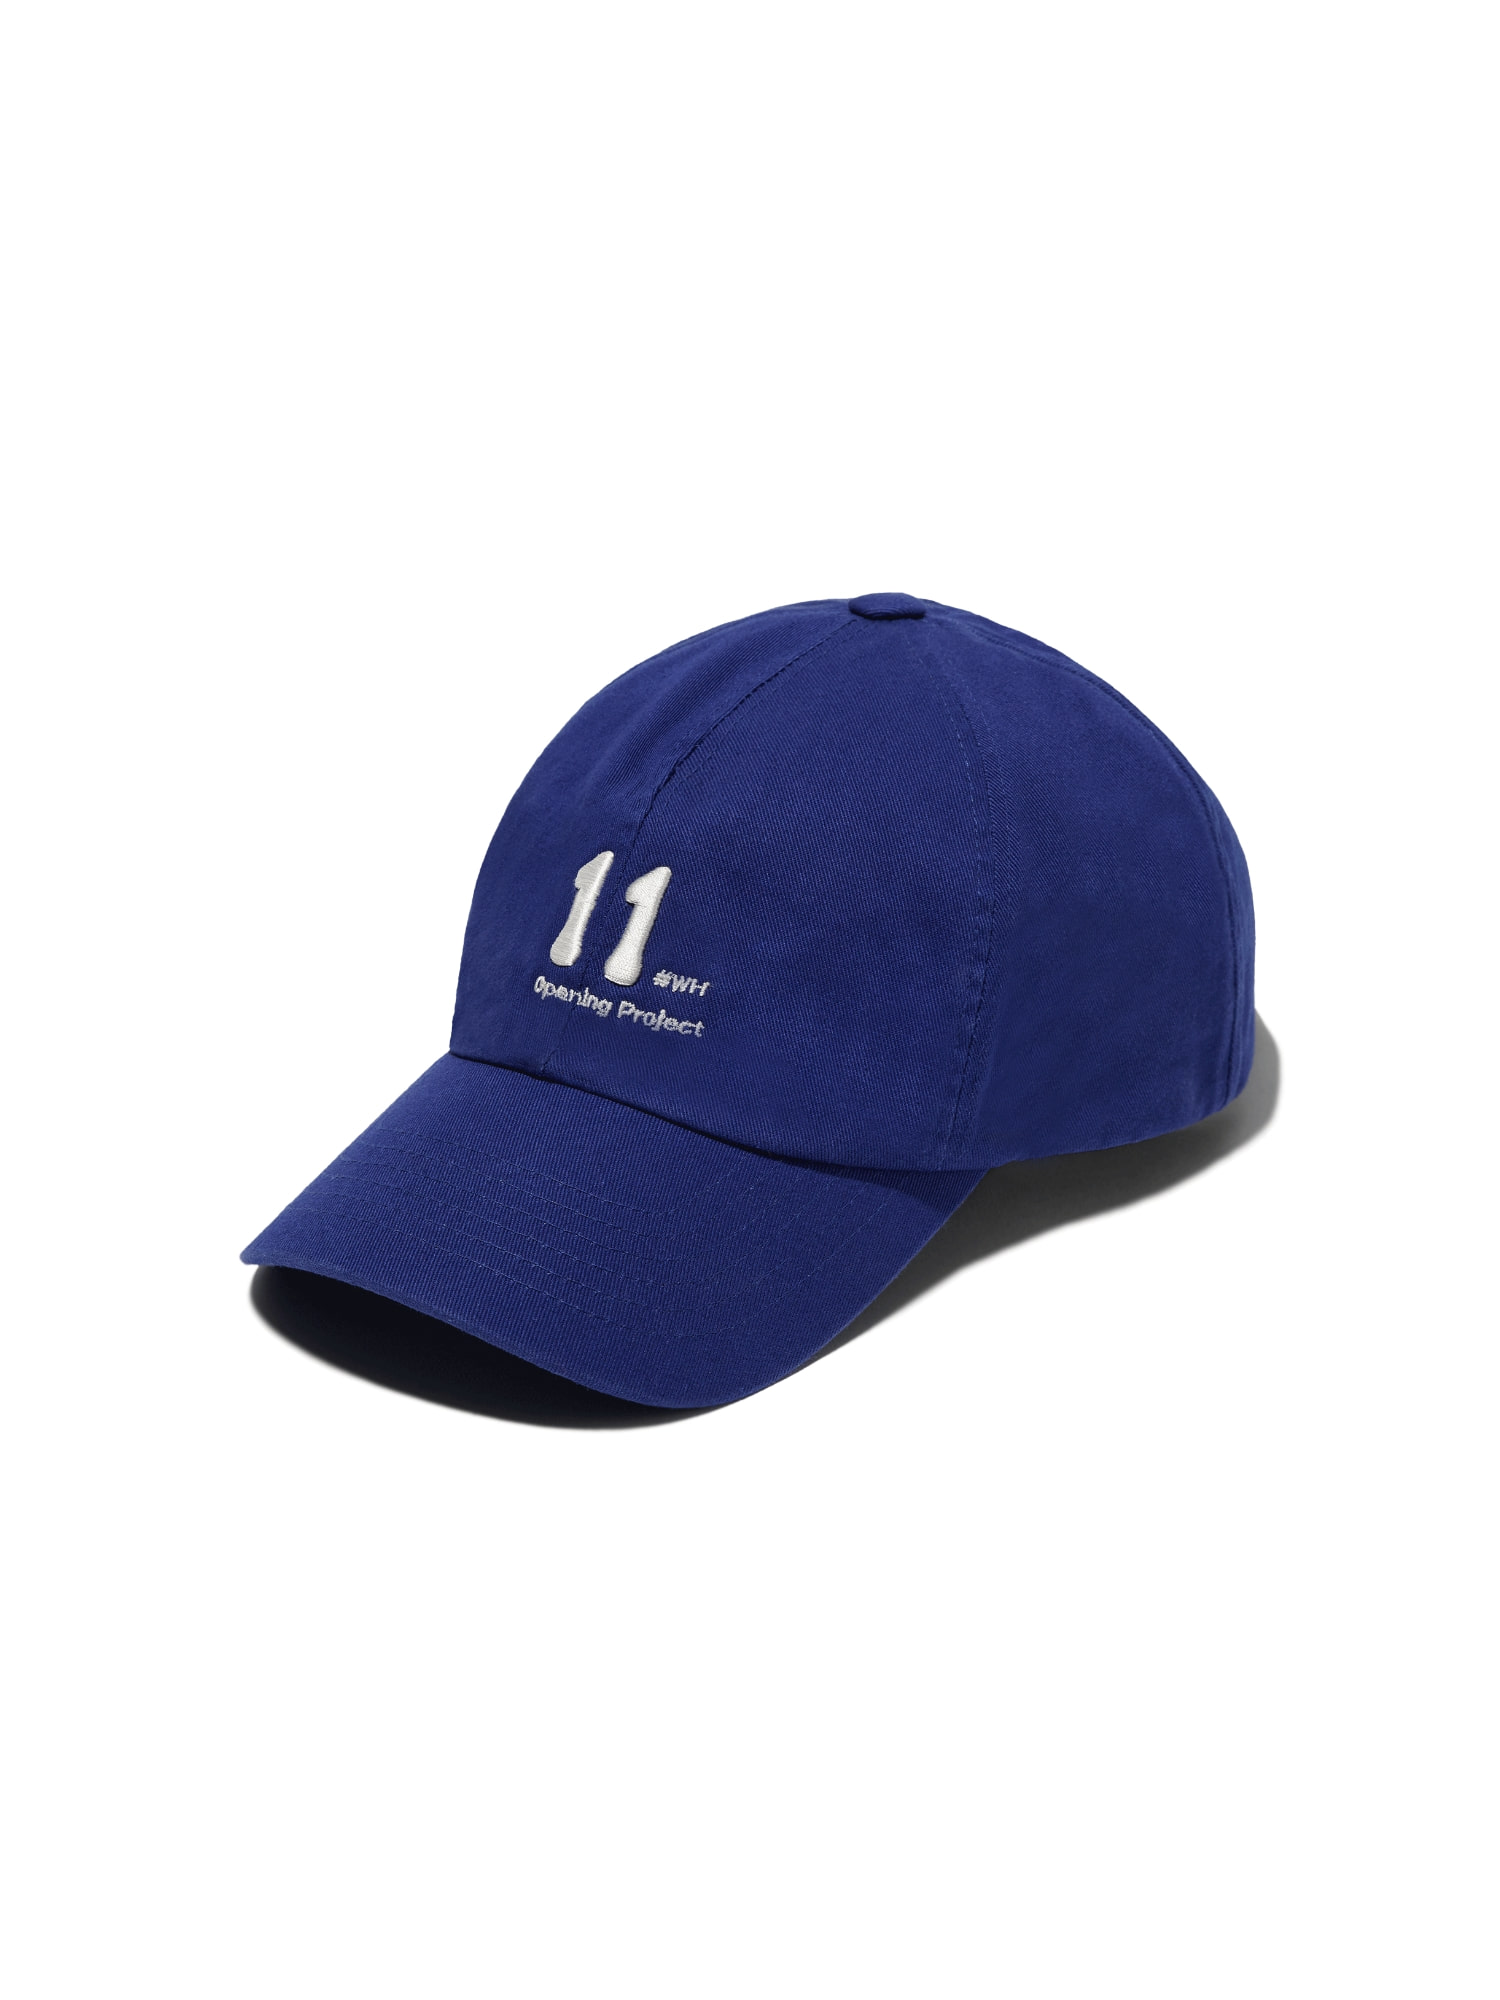 No11 Cap - Washed Blue